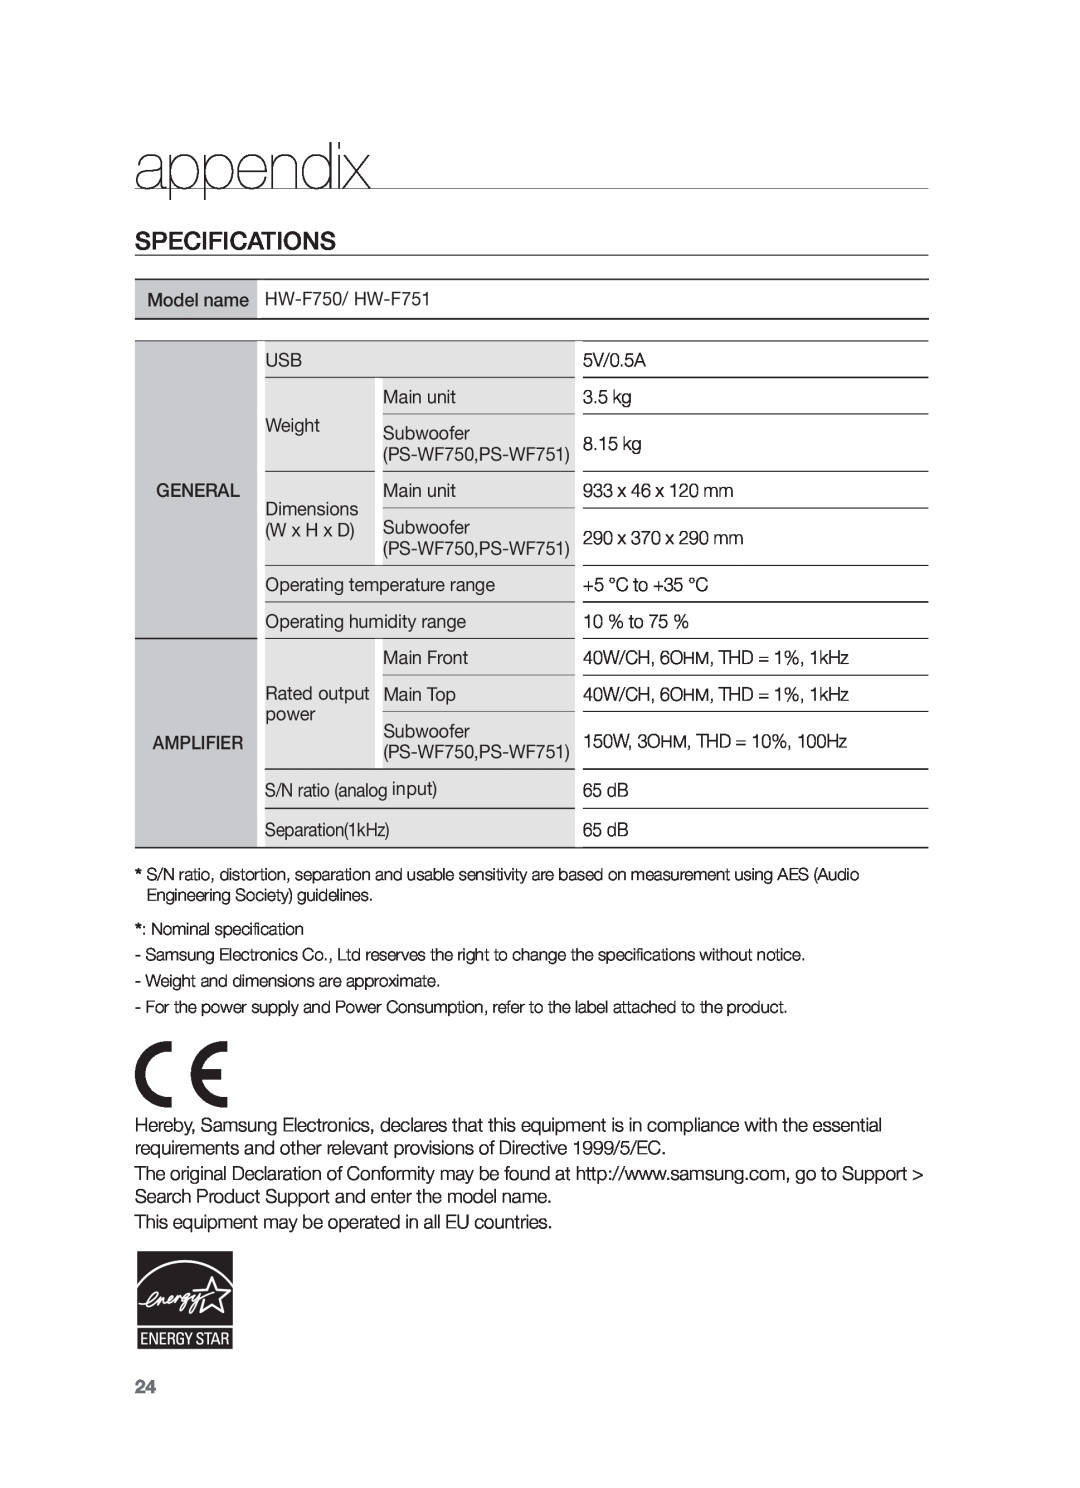 Samsung HW-F751/XN, HW-F751/TK, HW-F751/EN manual appendix, Specifications 